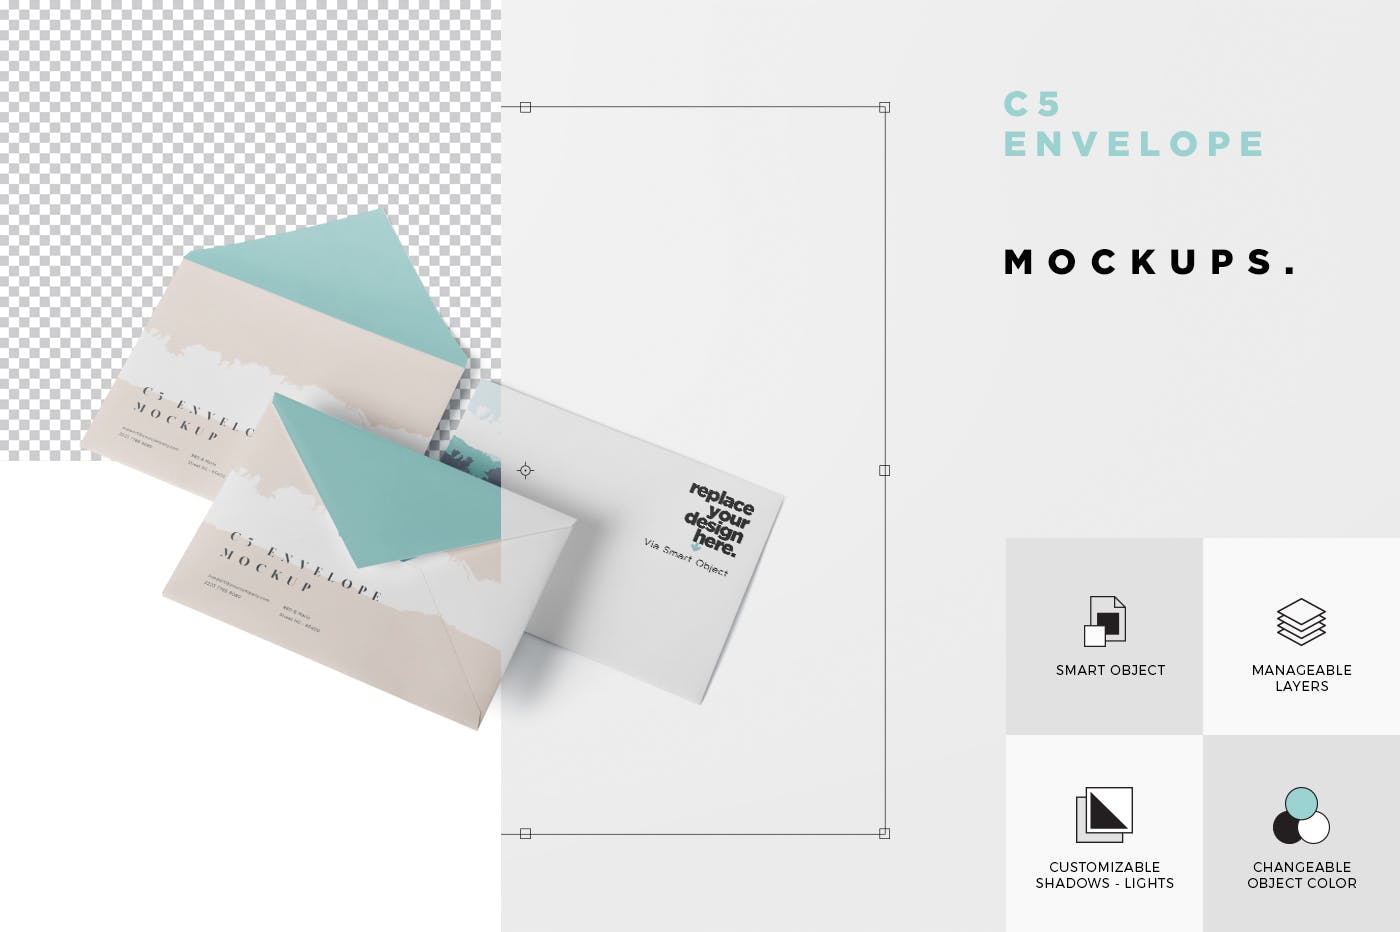 C5规格企业信封设计效果图蚂蚁素材精选 Envelope C5 Mock-Up Set插图(5)